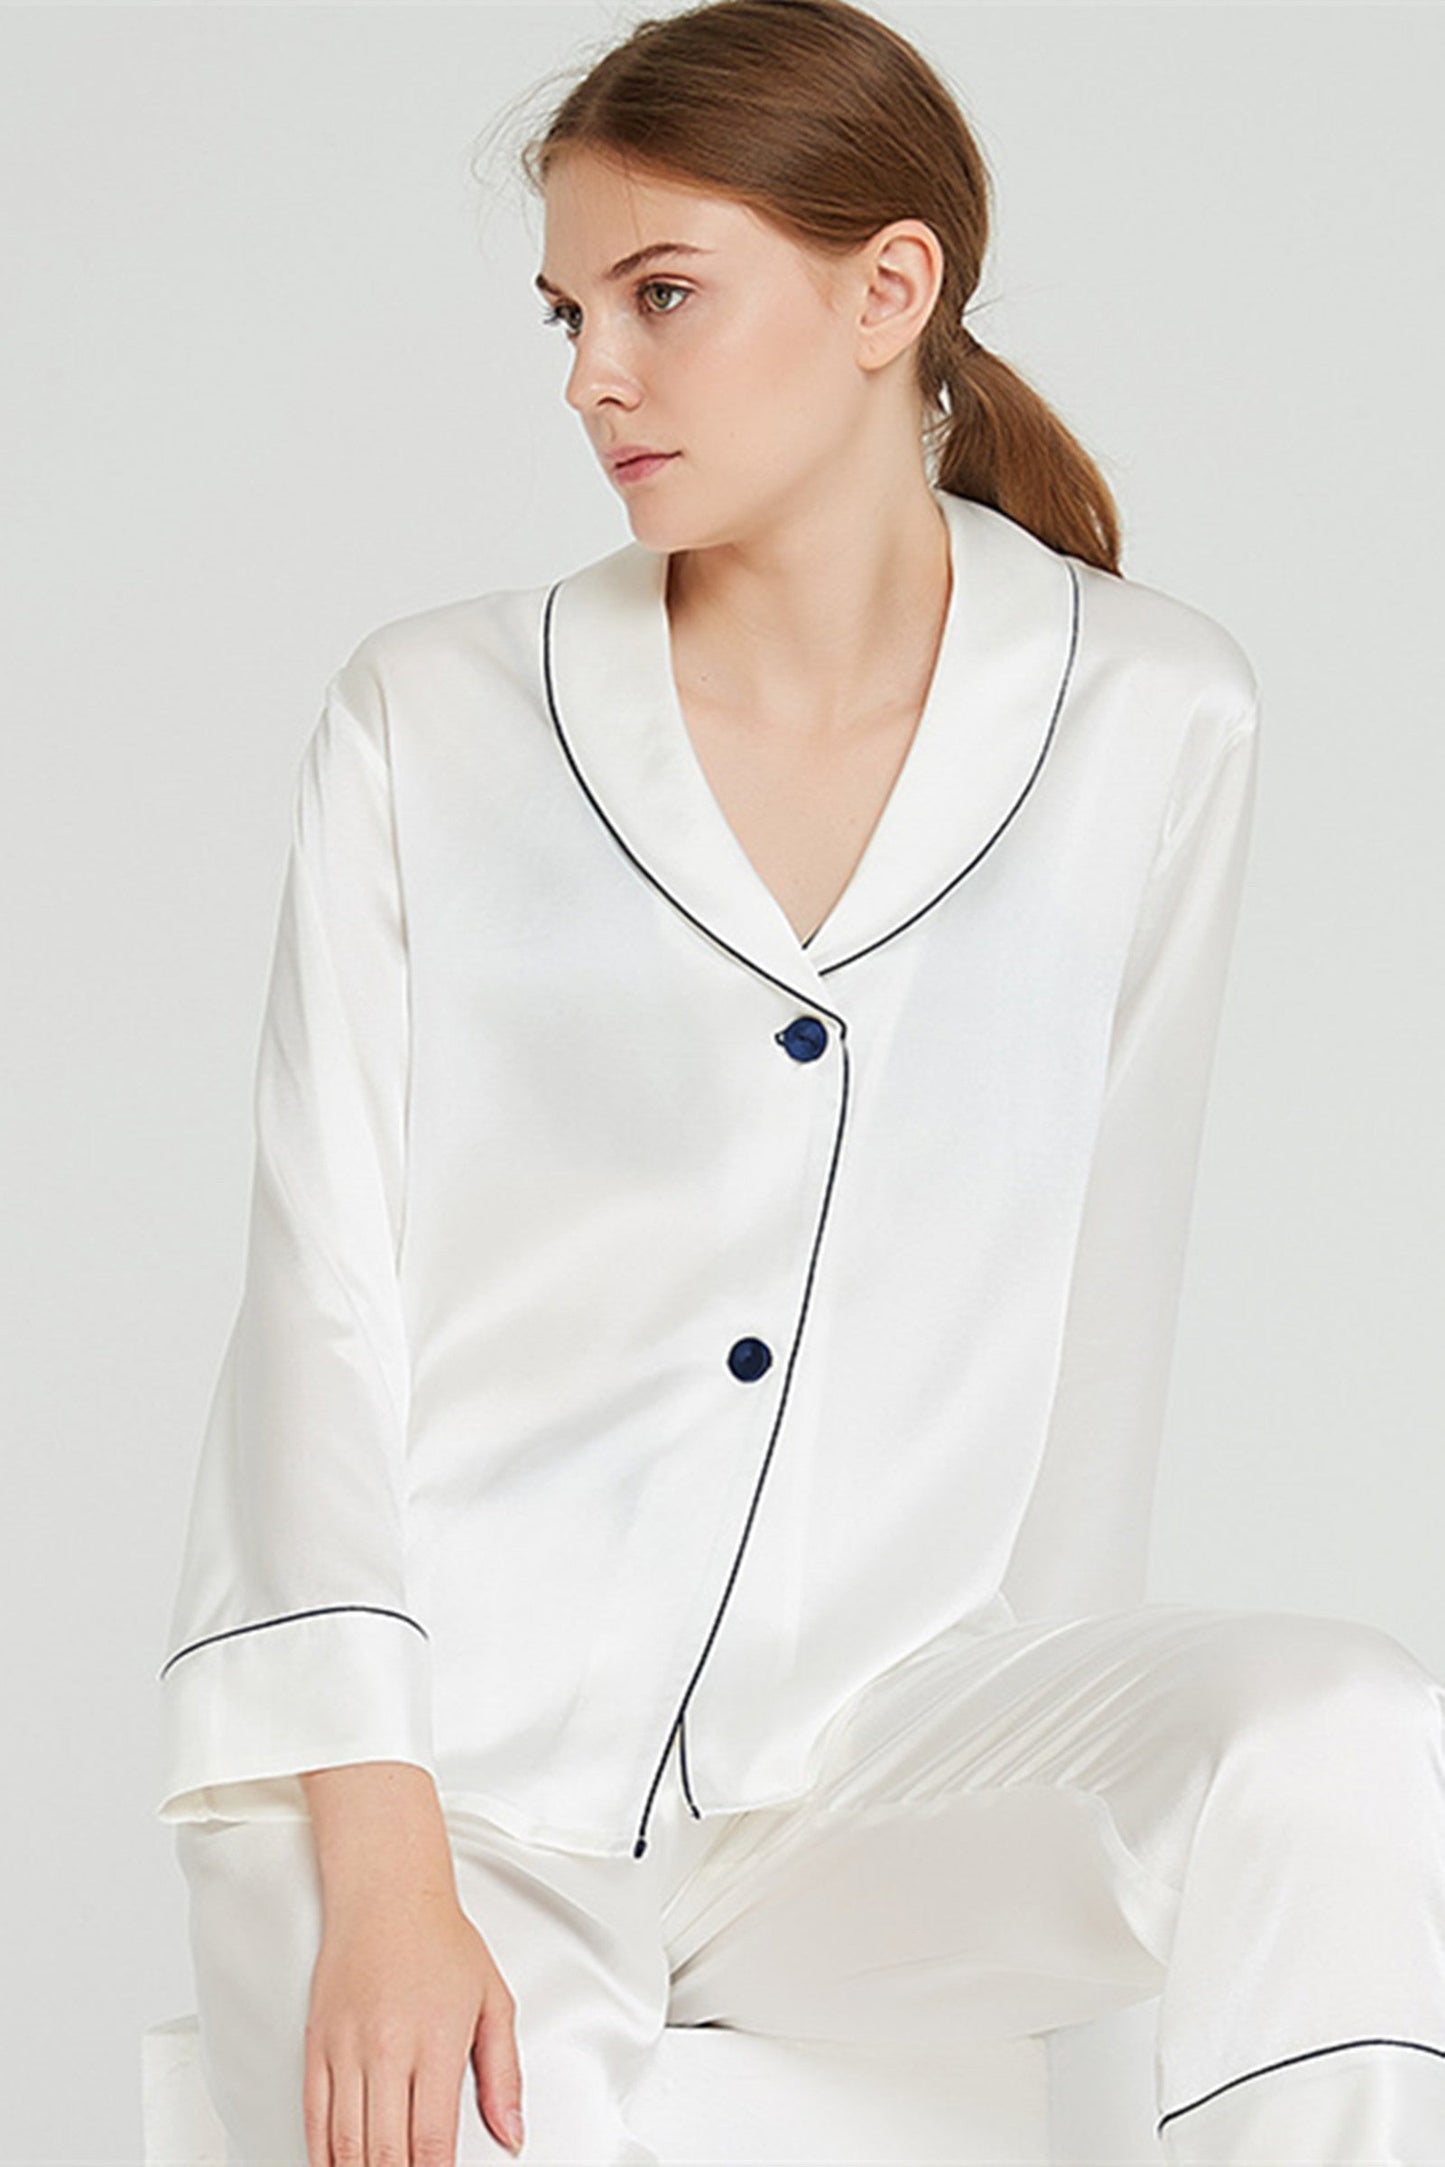 Silk Pajamas Breathable Home Wear